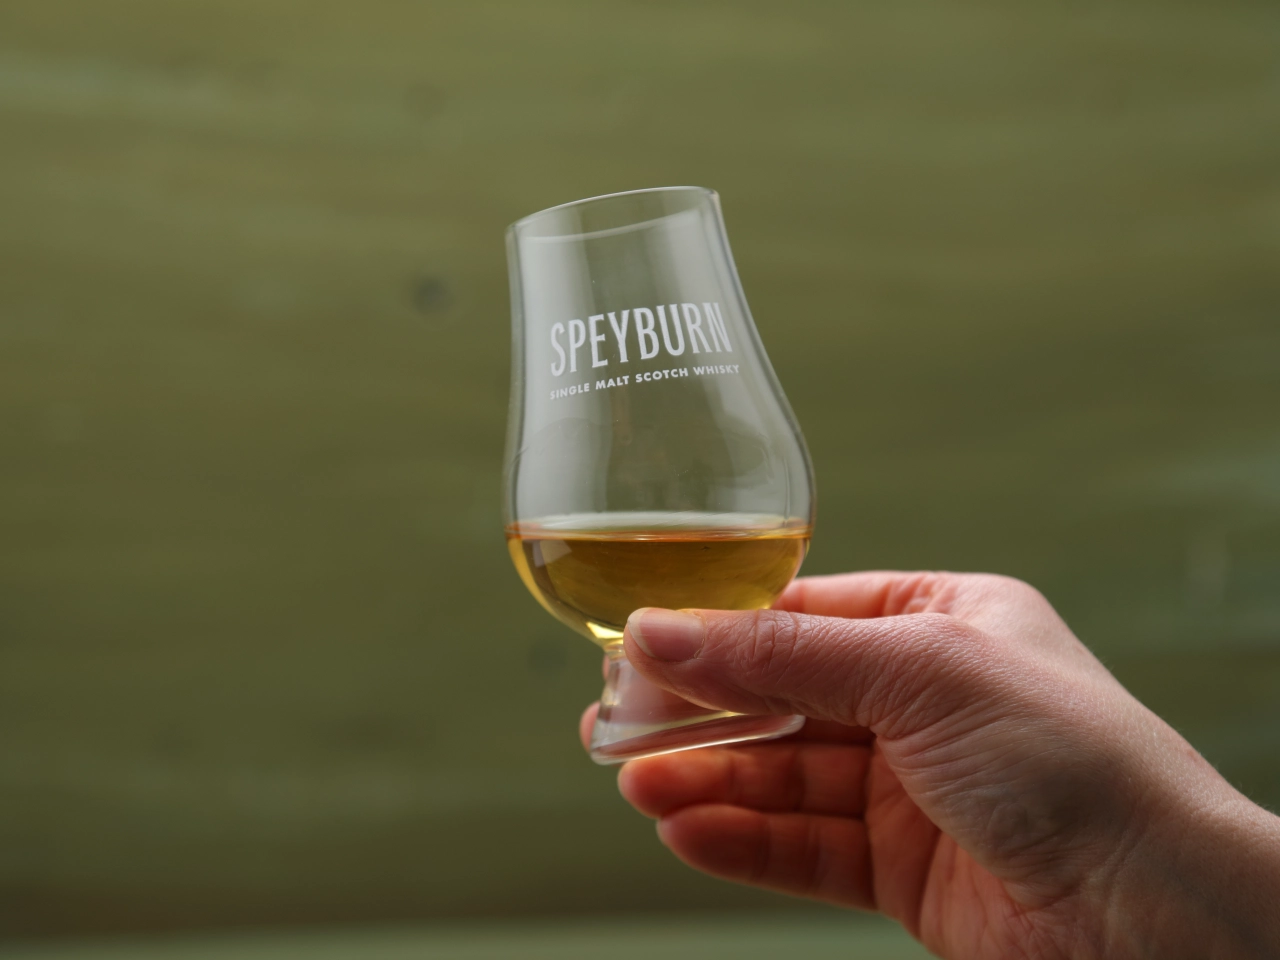 Speyburn Single malt scotch whisky in a Glencairn glass